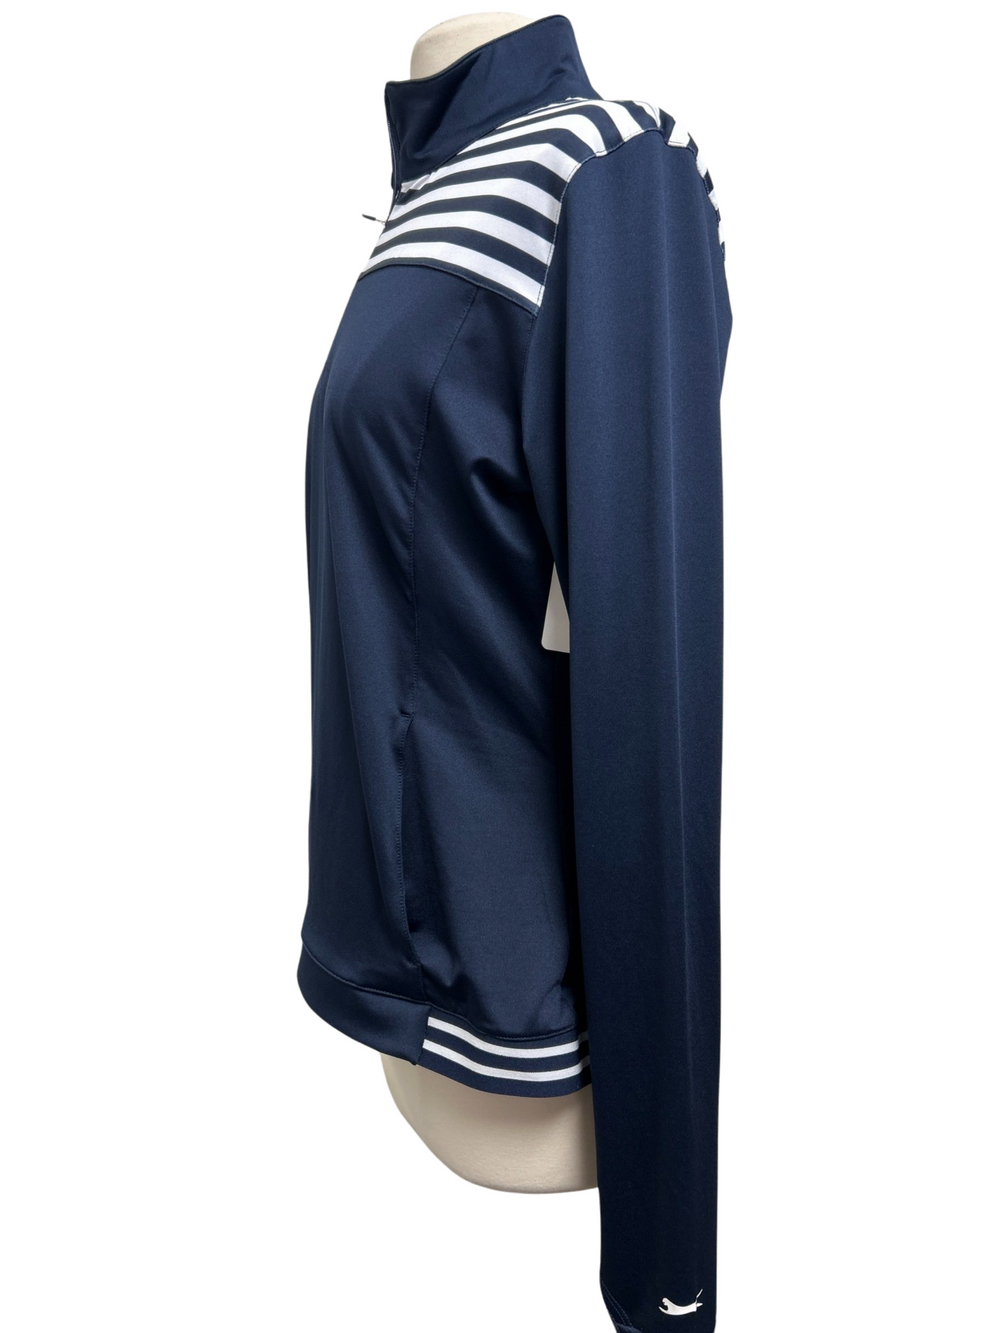 Slazenger Long Sleeve 1/2 Zip Pullover - Size L - Navy with White stripe - Skorzie